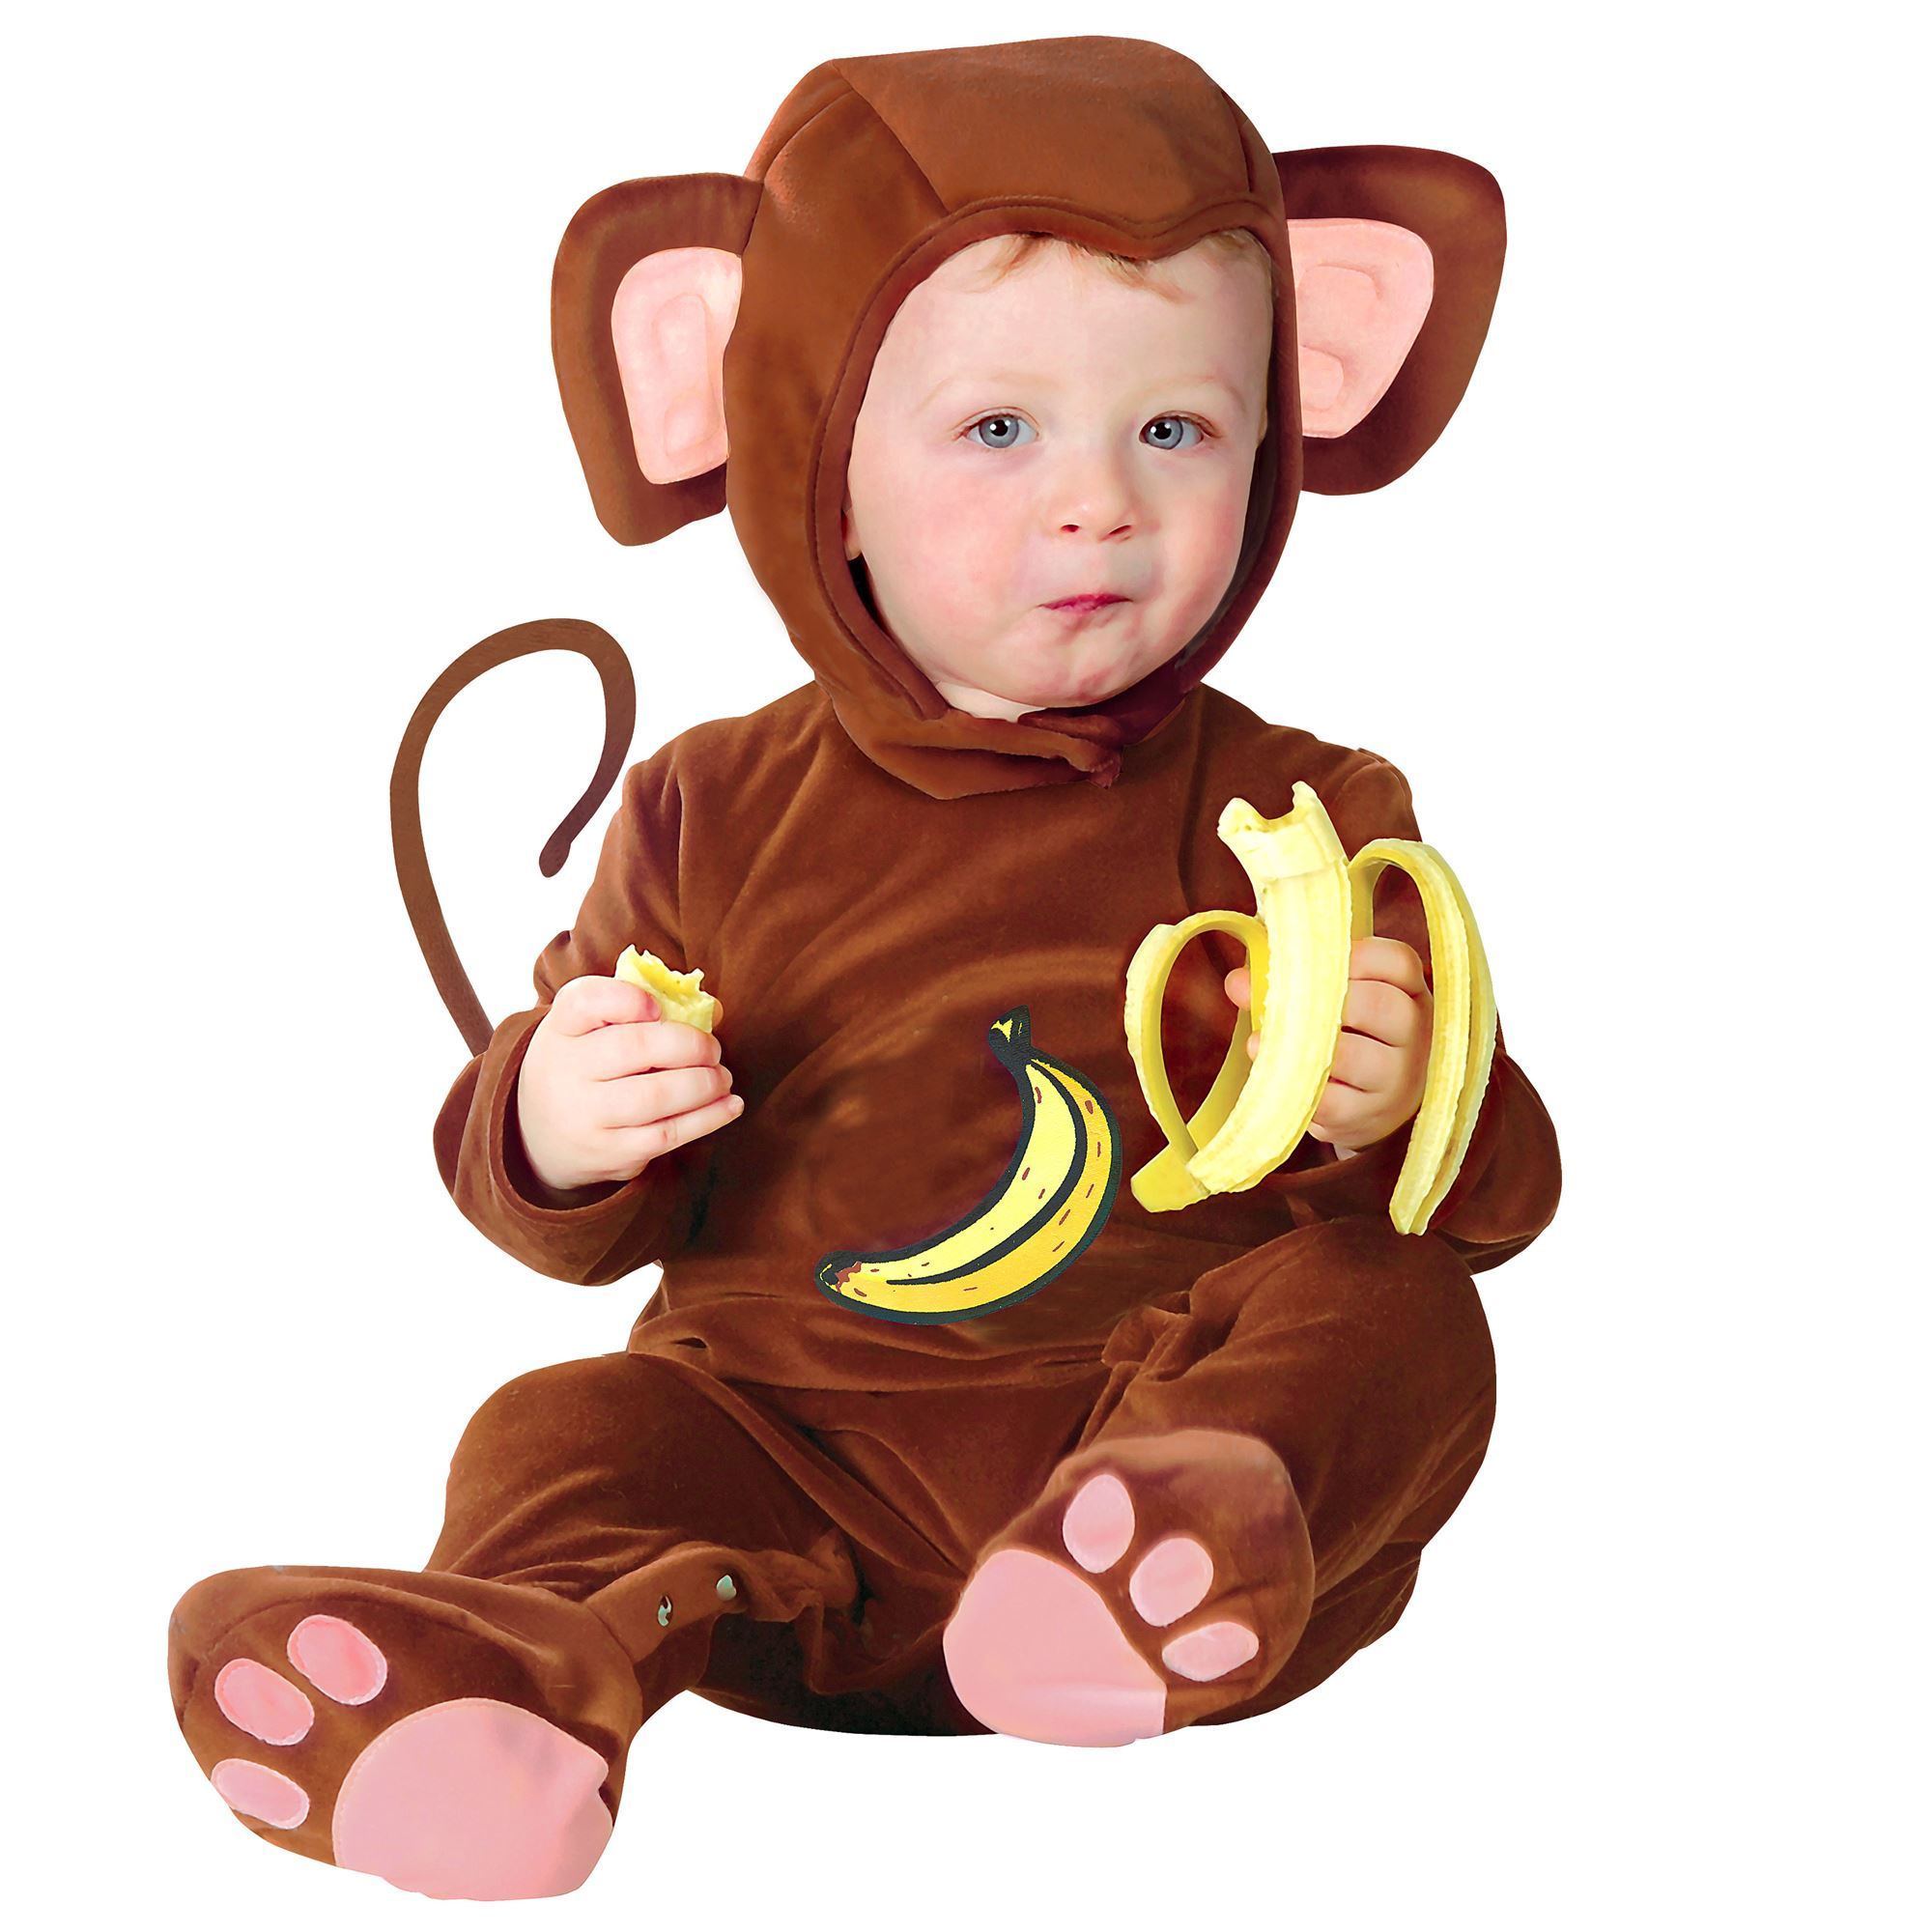 Snoezig baby aap verkleed kostuum klein aapje